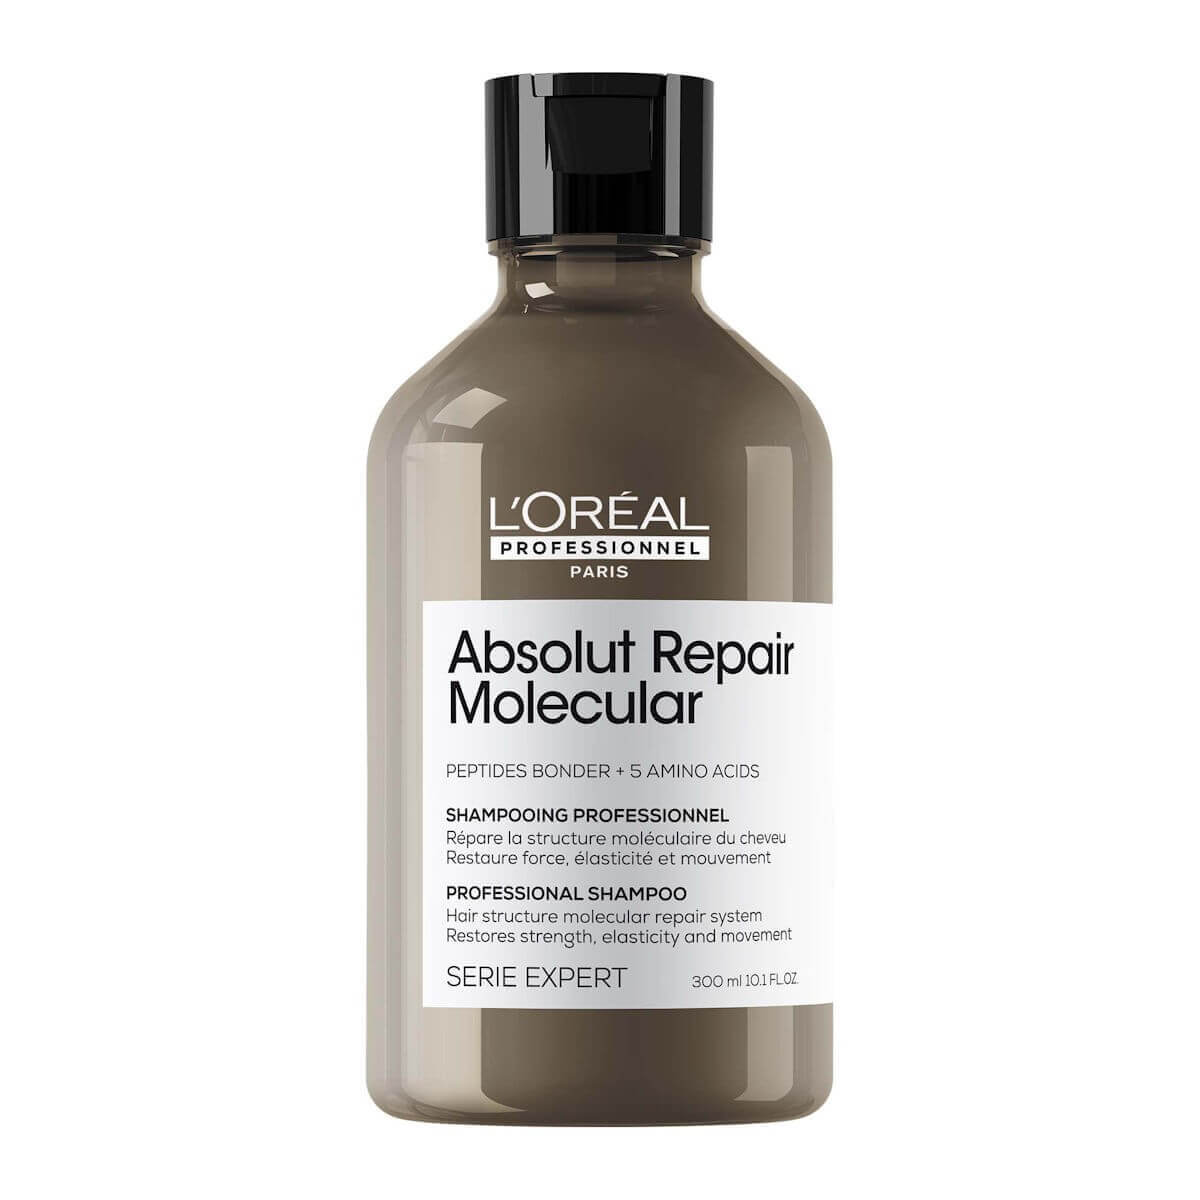 szampon loreal absolut repair lipidium 300ml